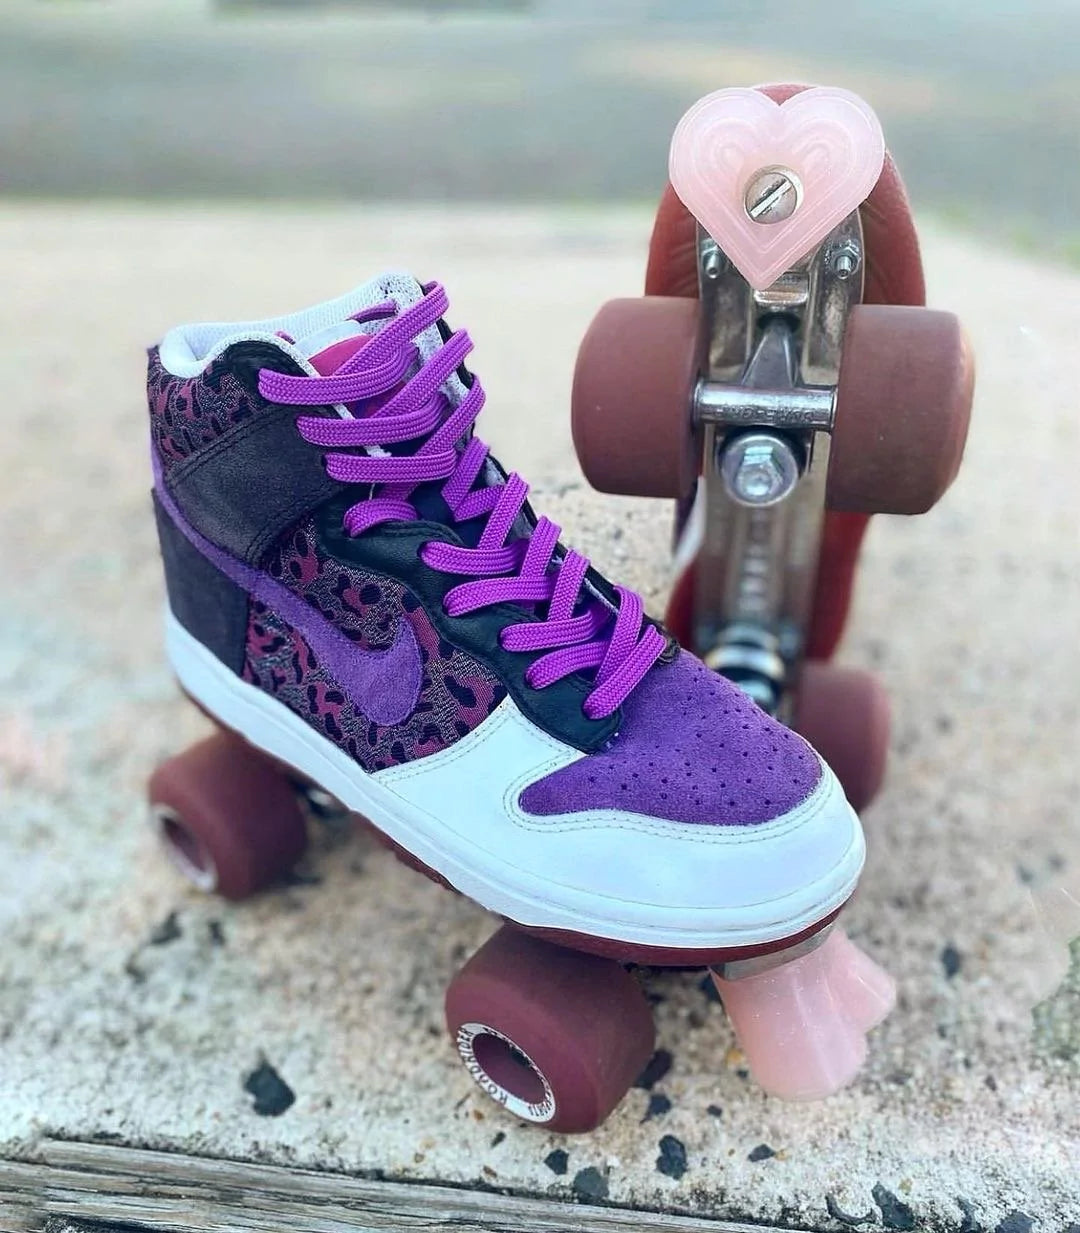 Grindstone Heartstoppers BOLT ON - heart shaped toe stops for quad roller skates